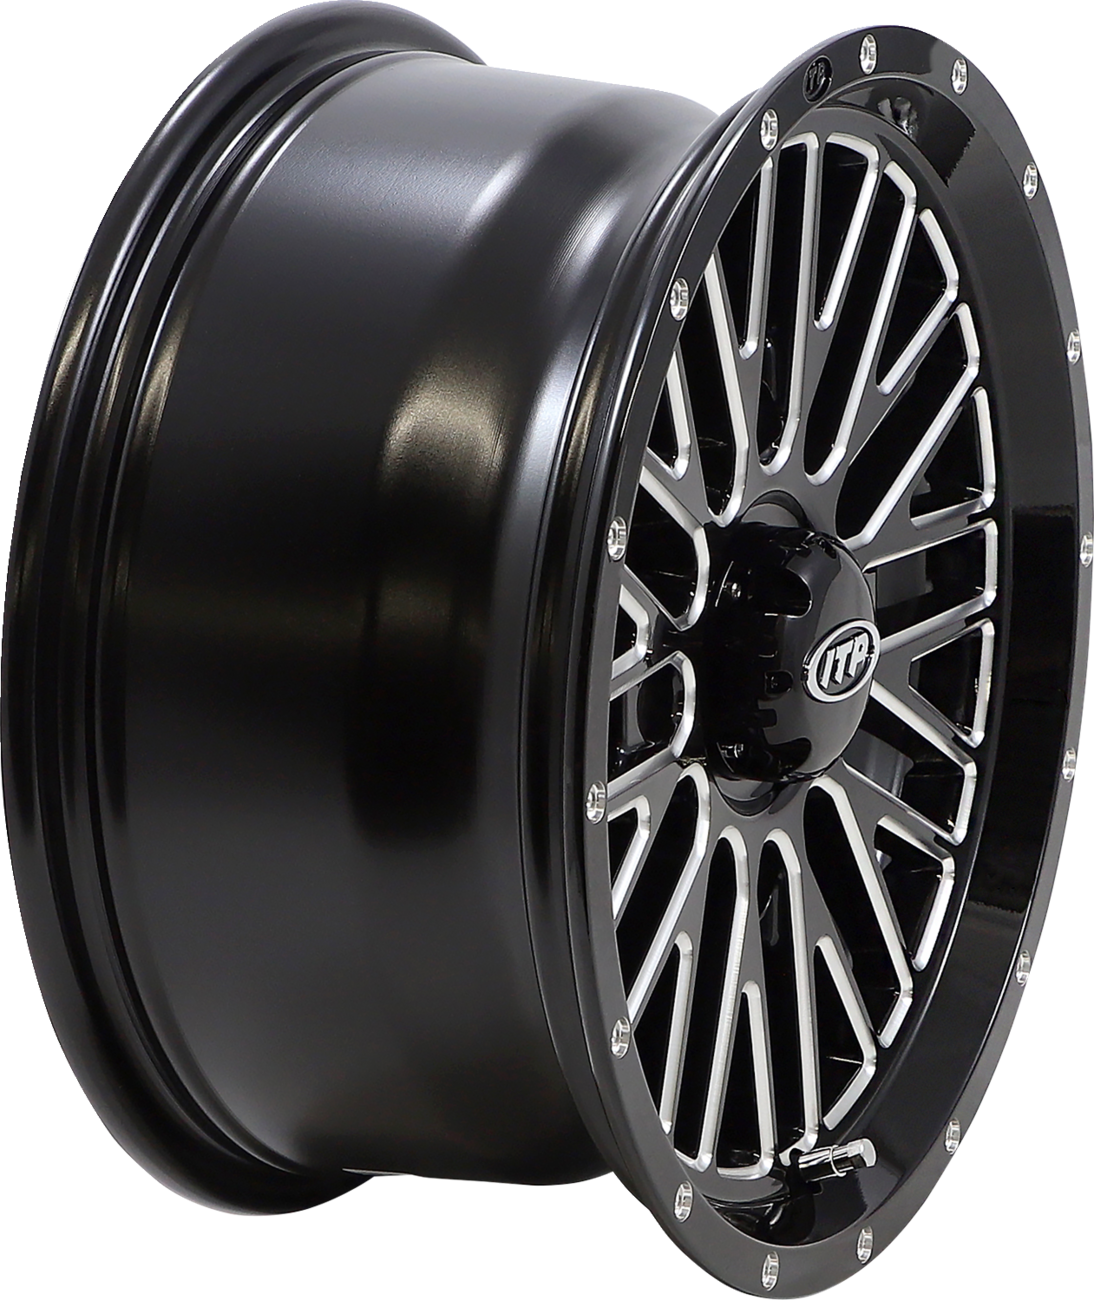 ITP Wheel - Momentum - Front/Rear - Black/Milled - 15x7 - 4/156 - 5+2 (+30 mm) 1522741731B